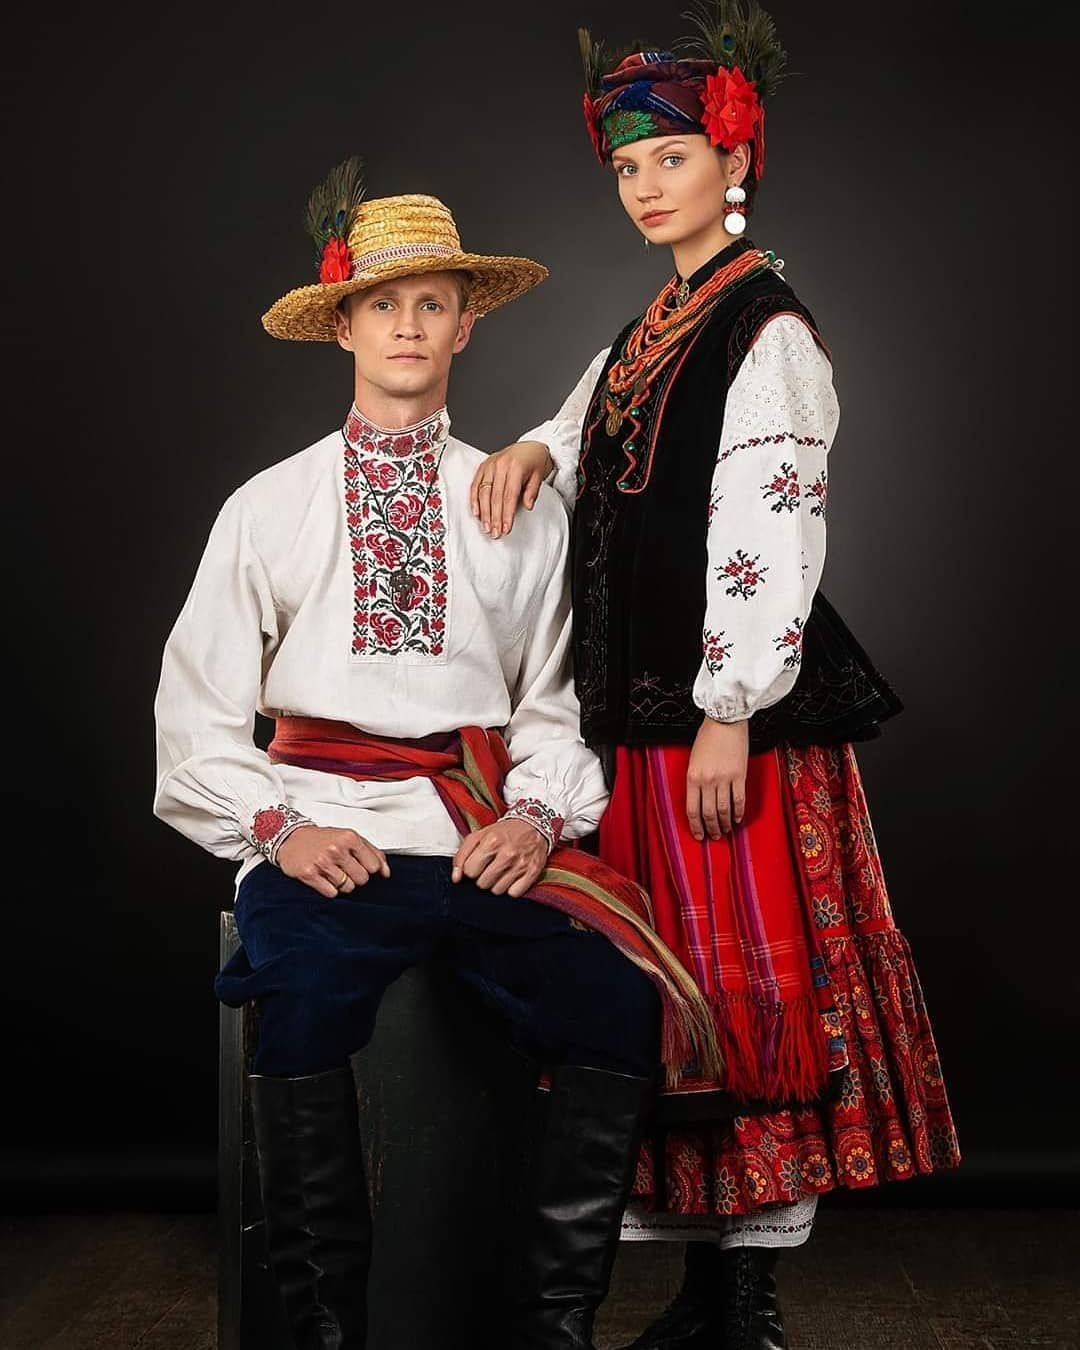 Национальная одежда украинцев